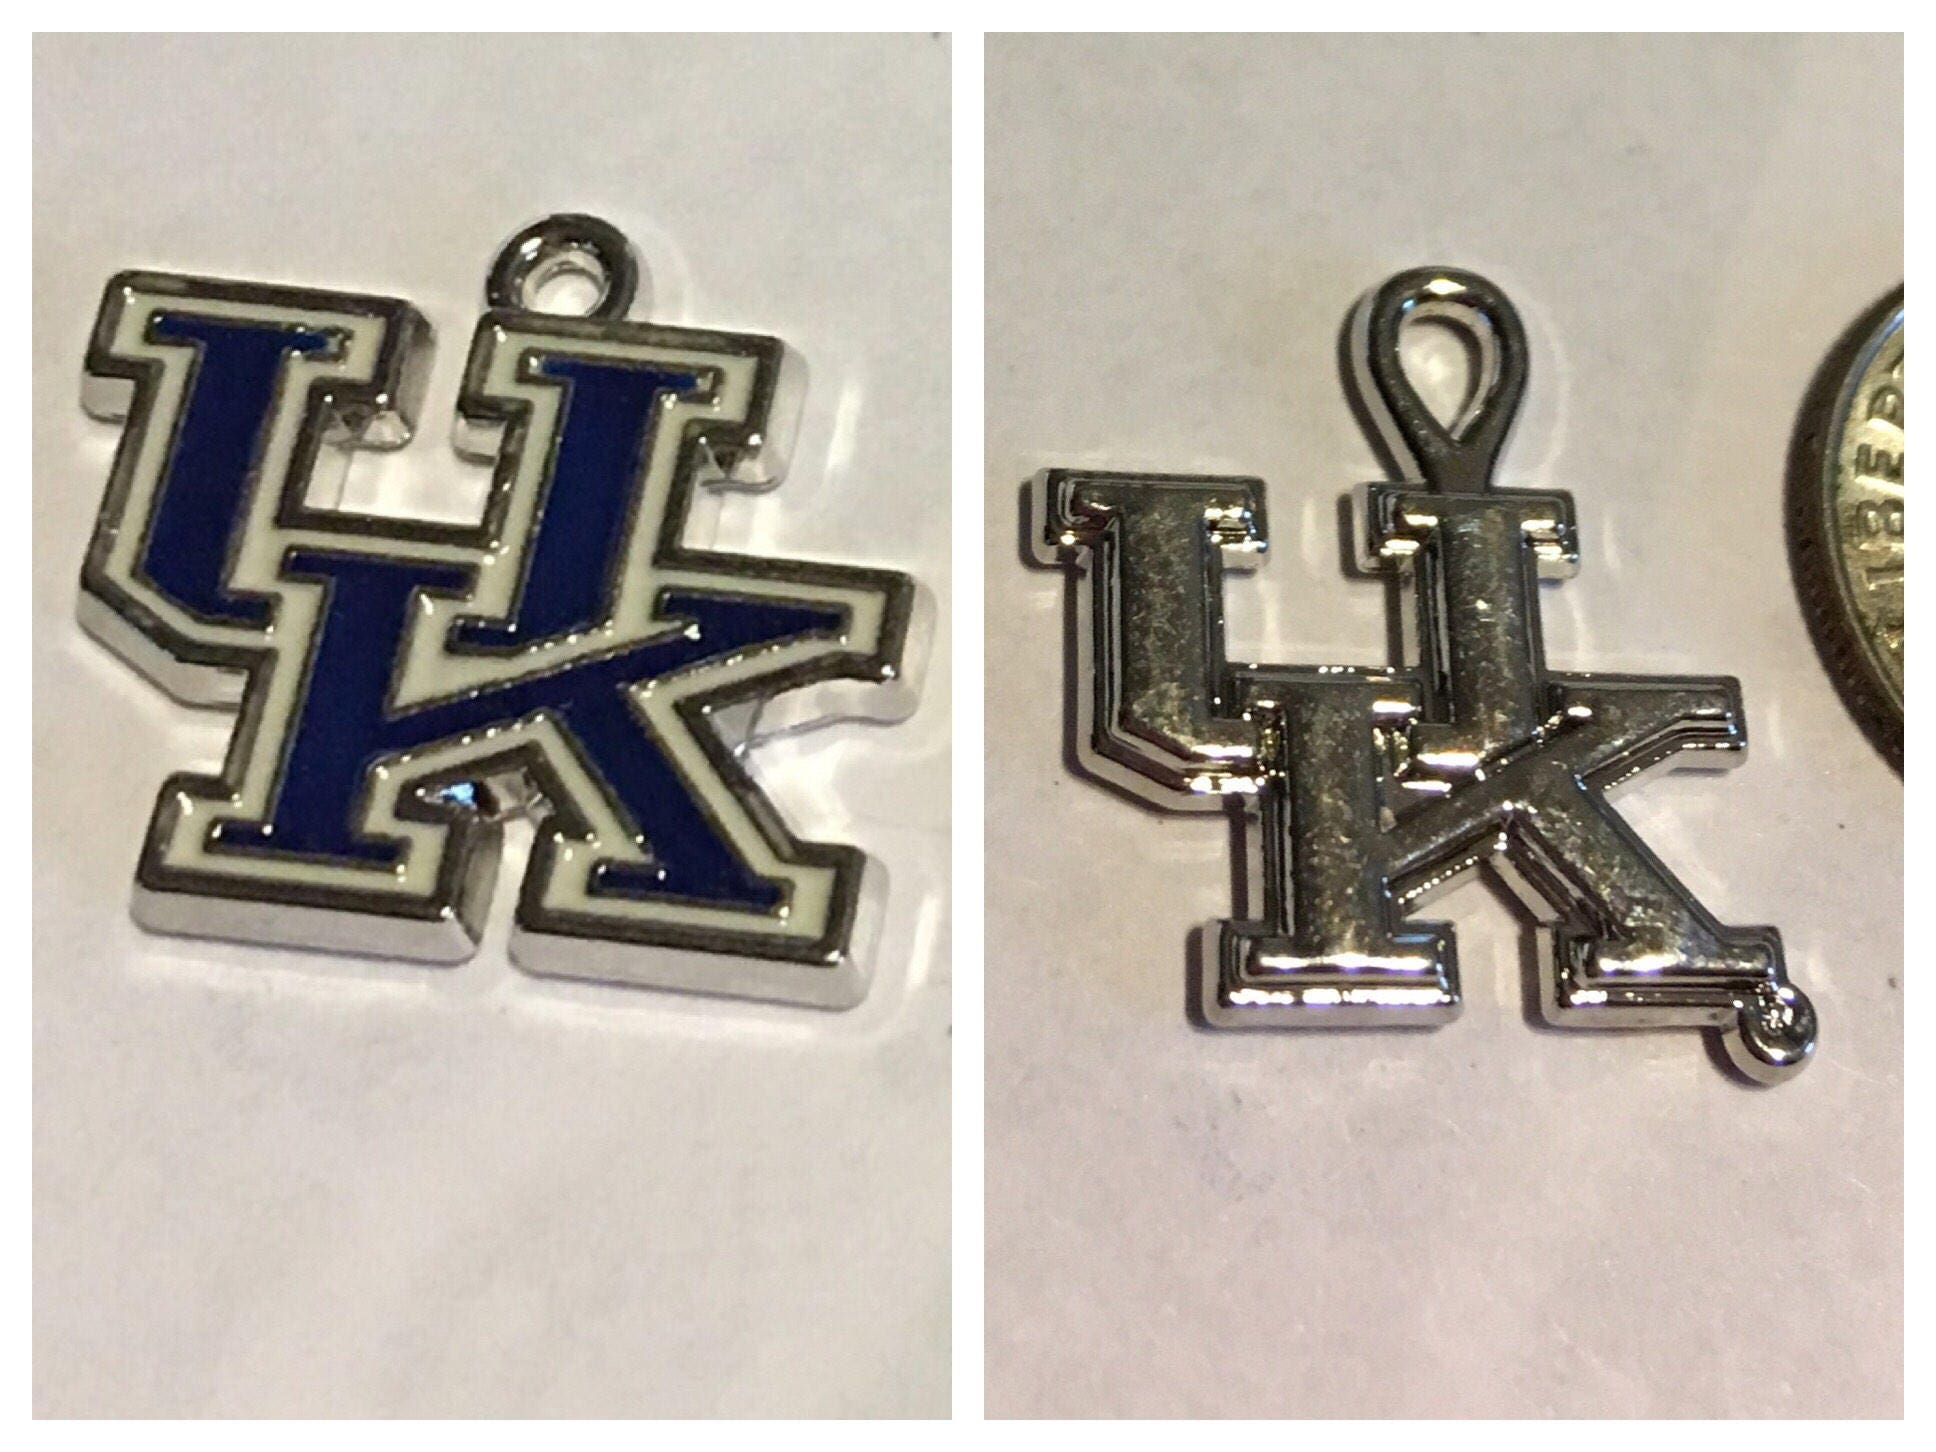 Kentucky Wildcats Enamel Pendant Necklace – CANVAS